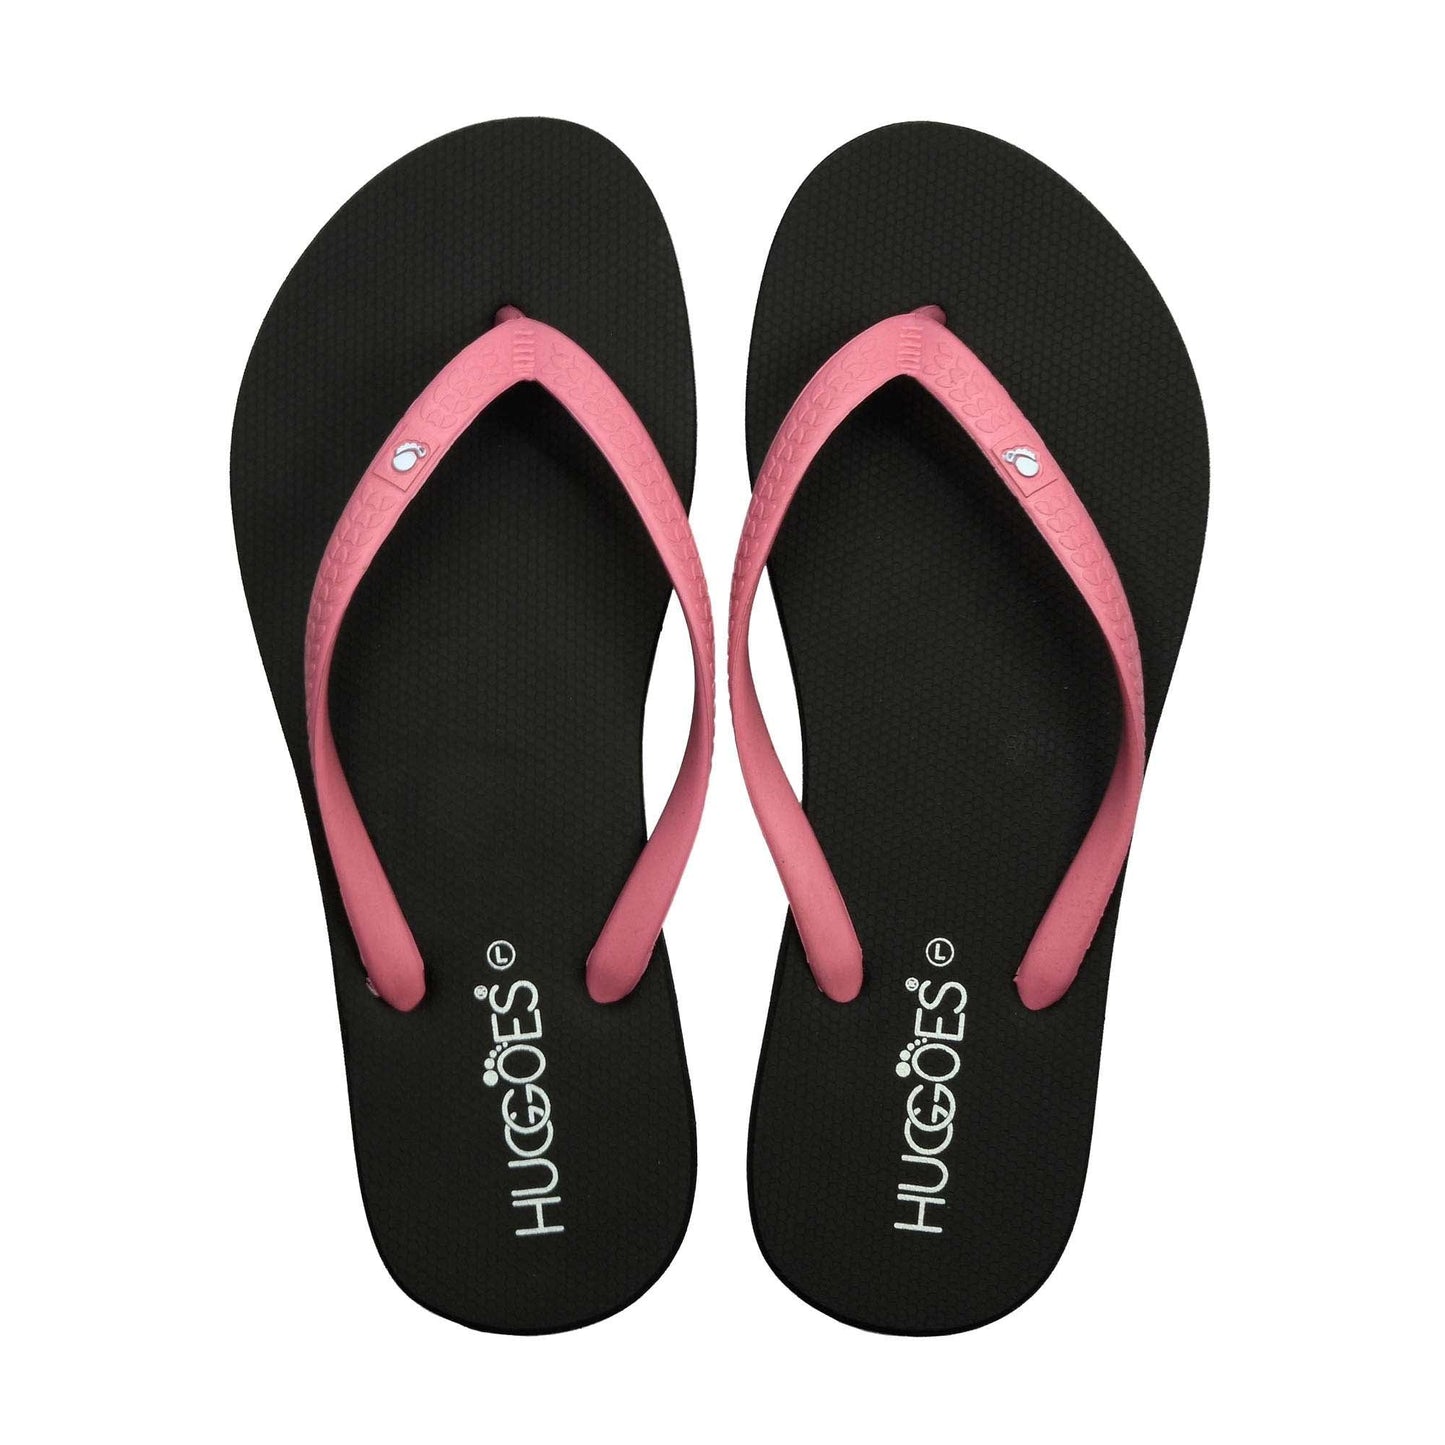 Huggoes by Aerothotic - Ebony Women Flip Flops Slippers - Original Thailand Imported - BK1